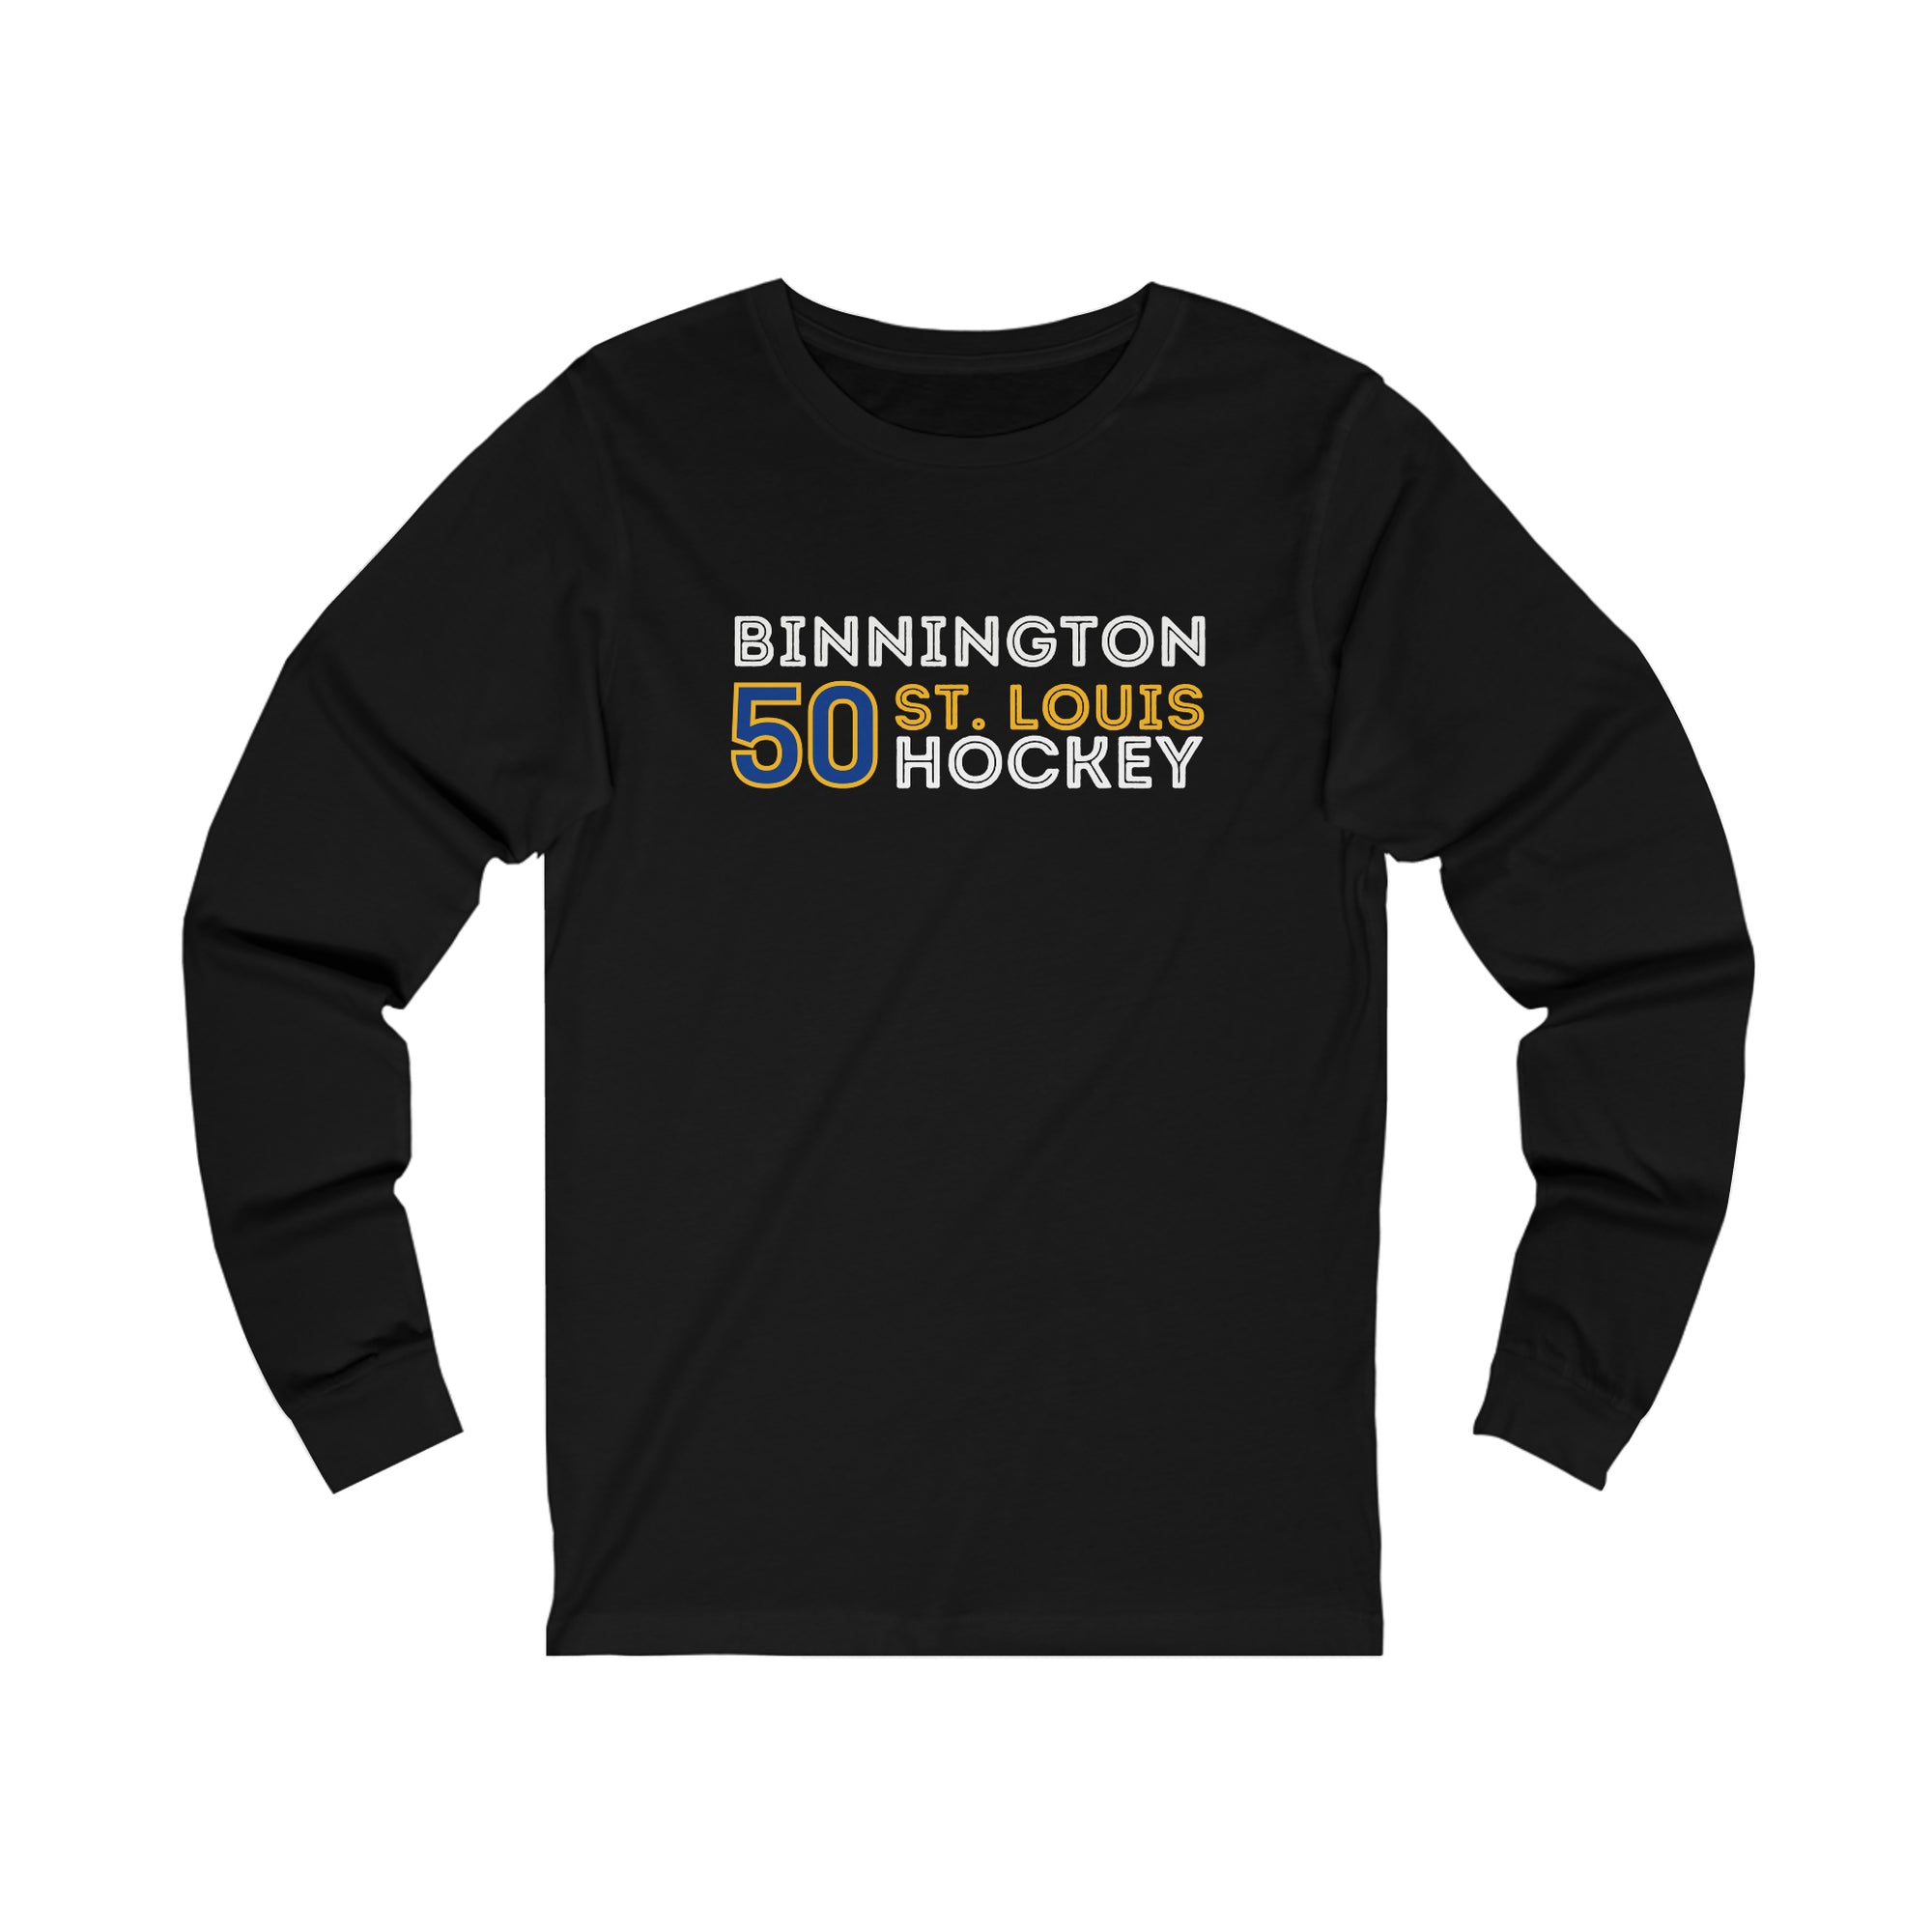 Binnington 50 St. Louis Hockey Grafitti Wall Design Unisex Jersey Long Sleeve Shirt